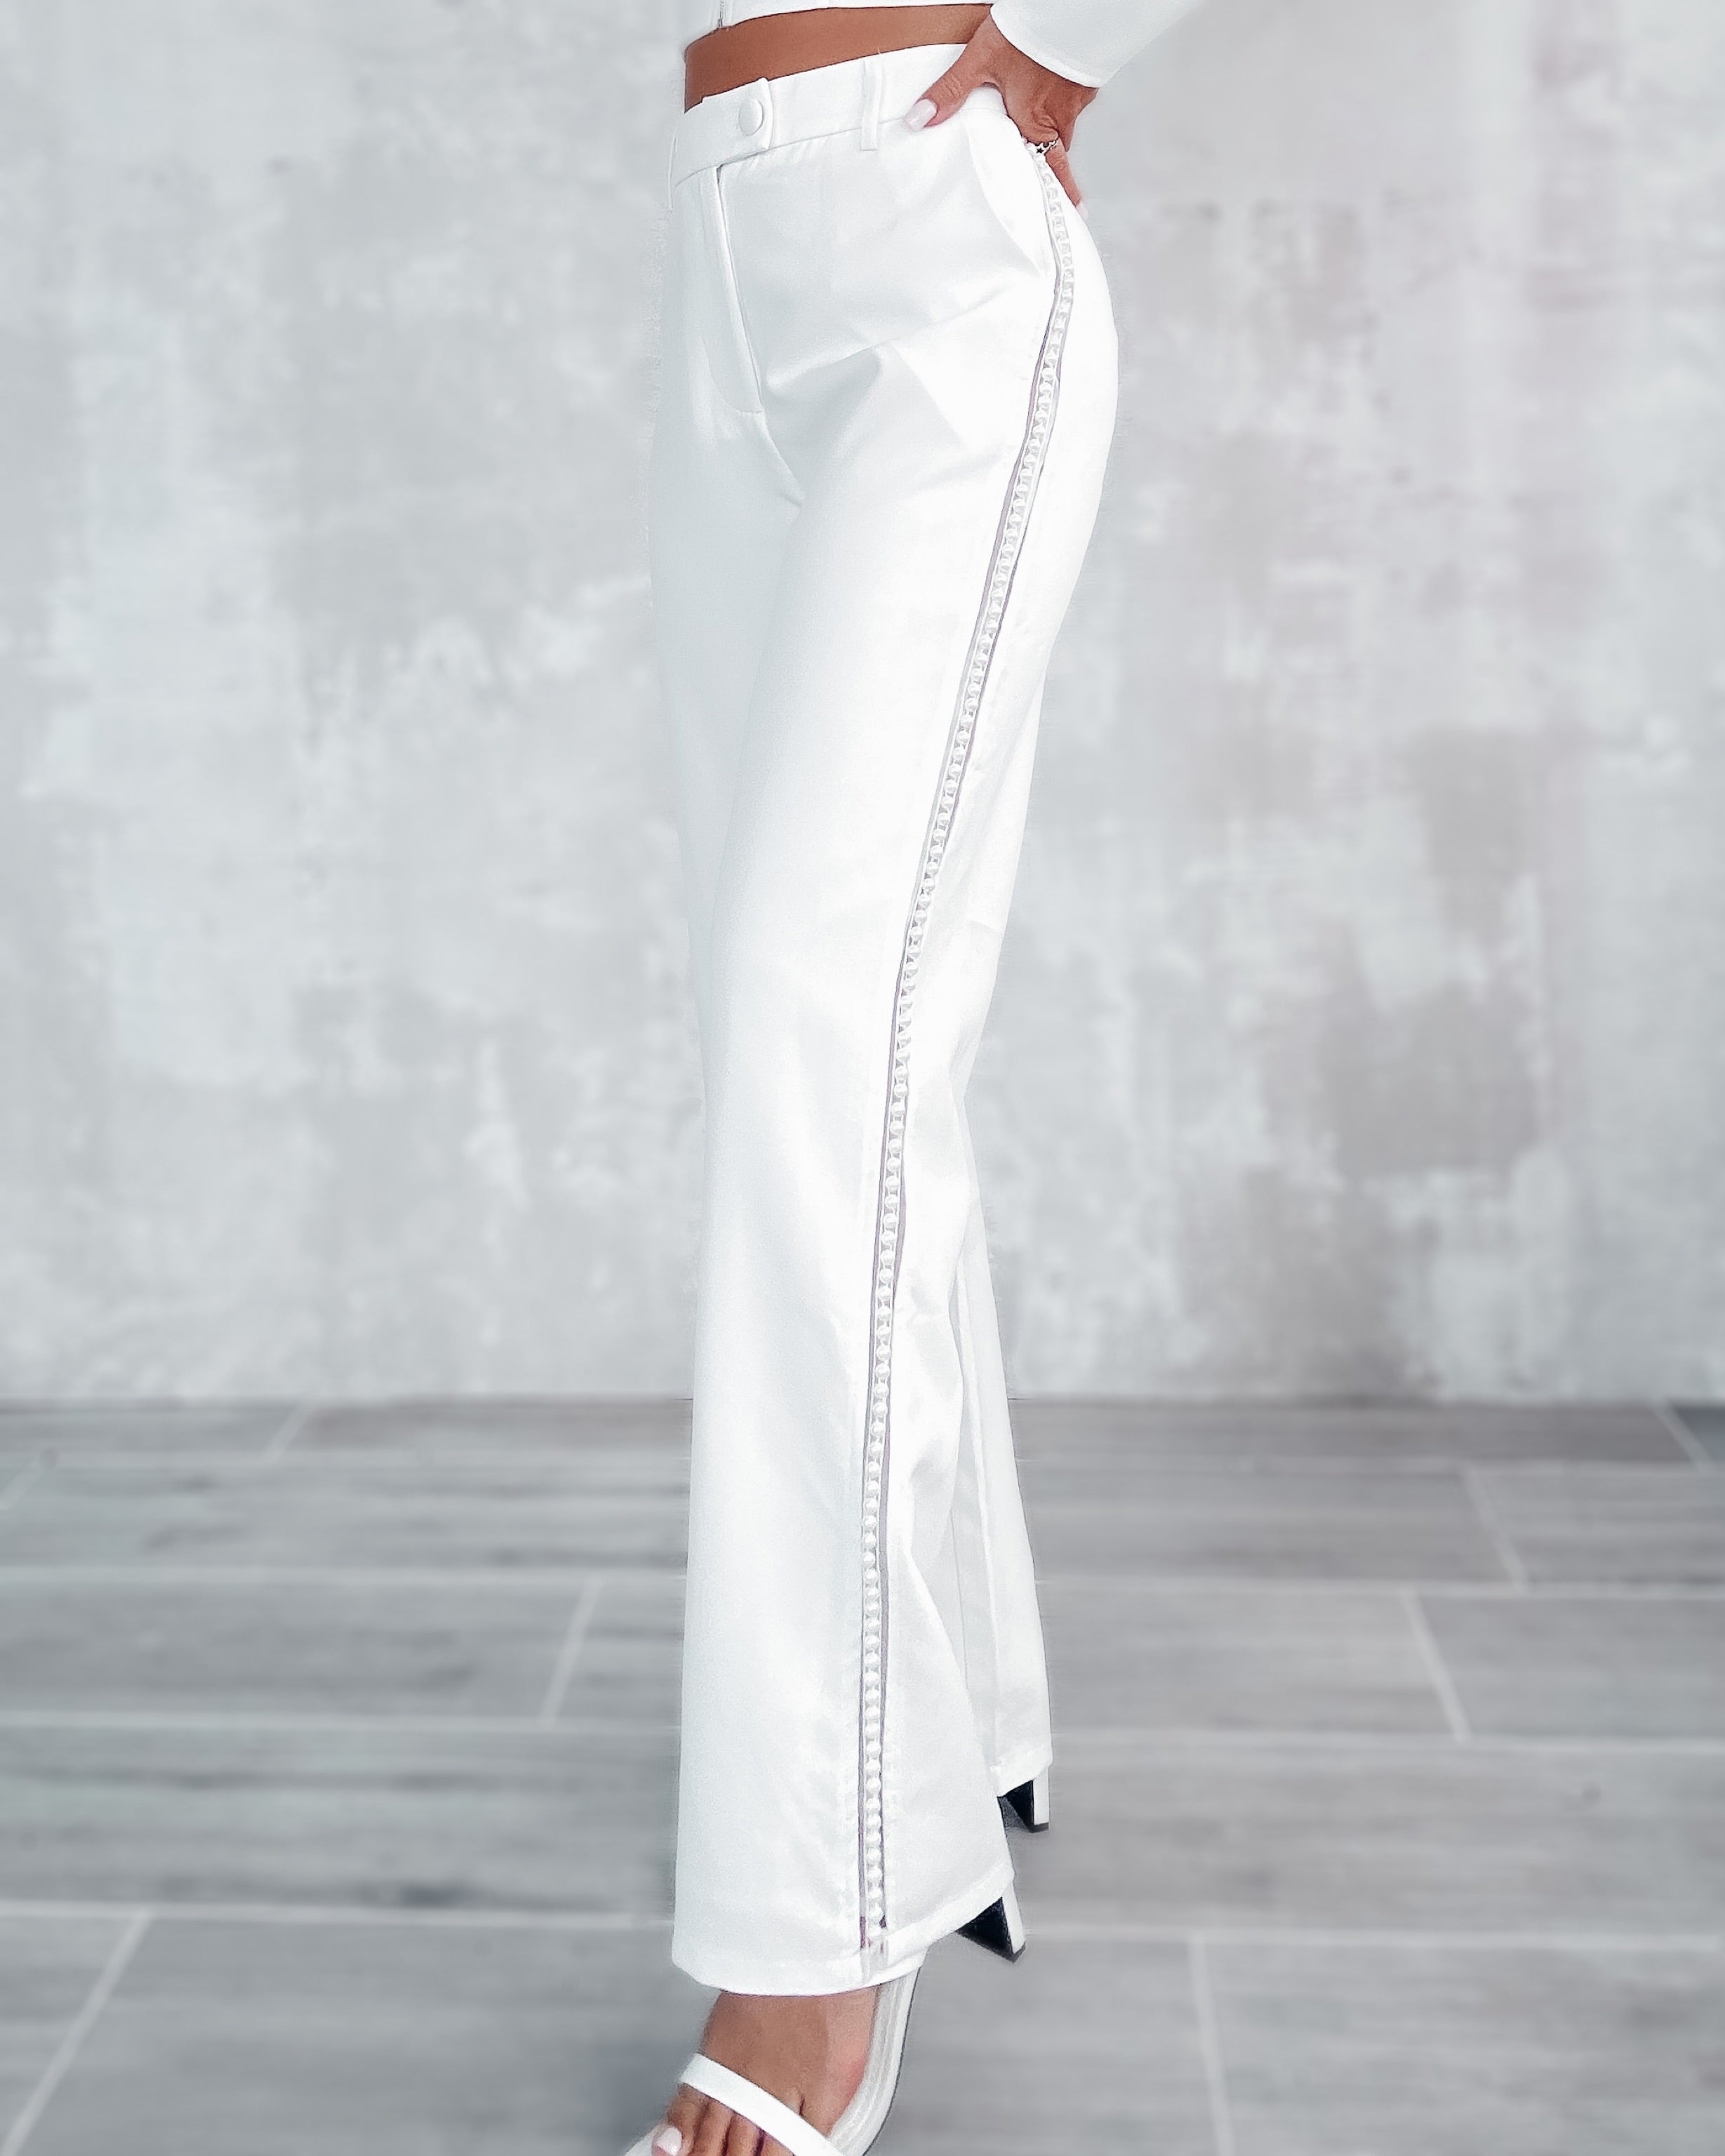 Petite Studio's Buvette Pearl Pants in Black - Women's Fashion